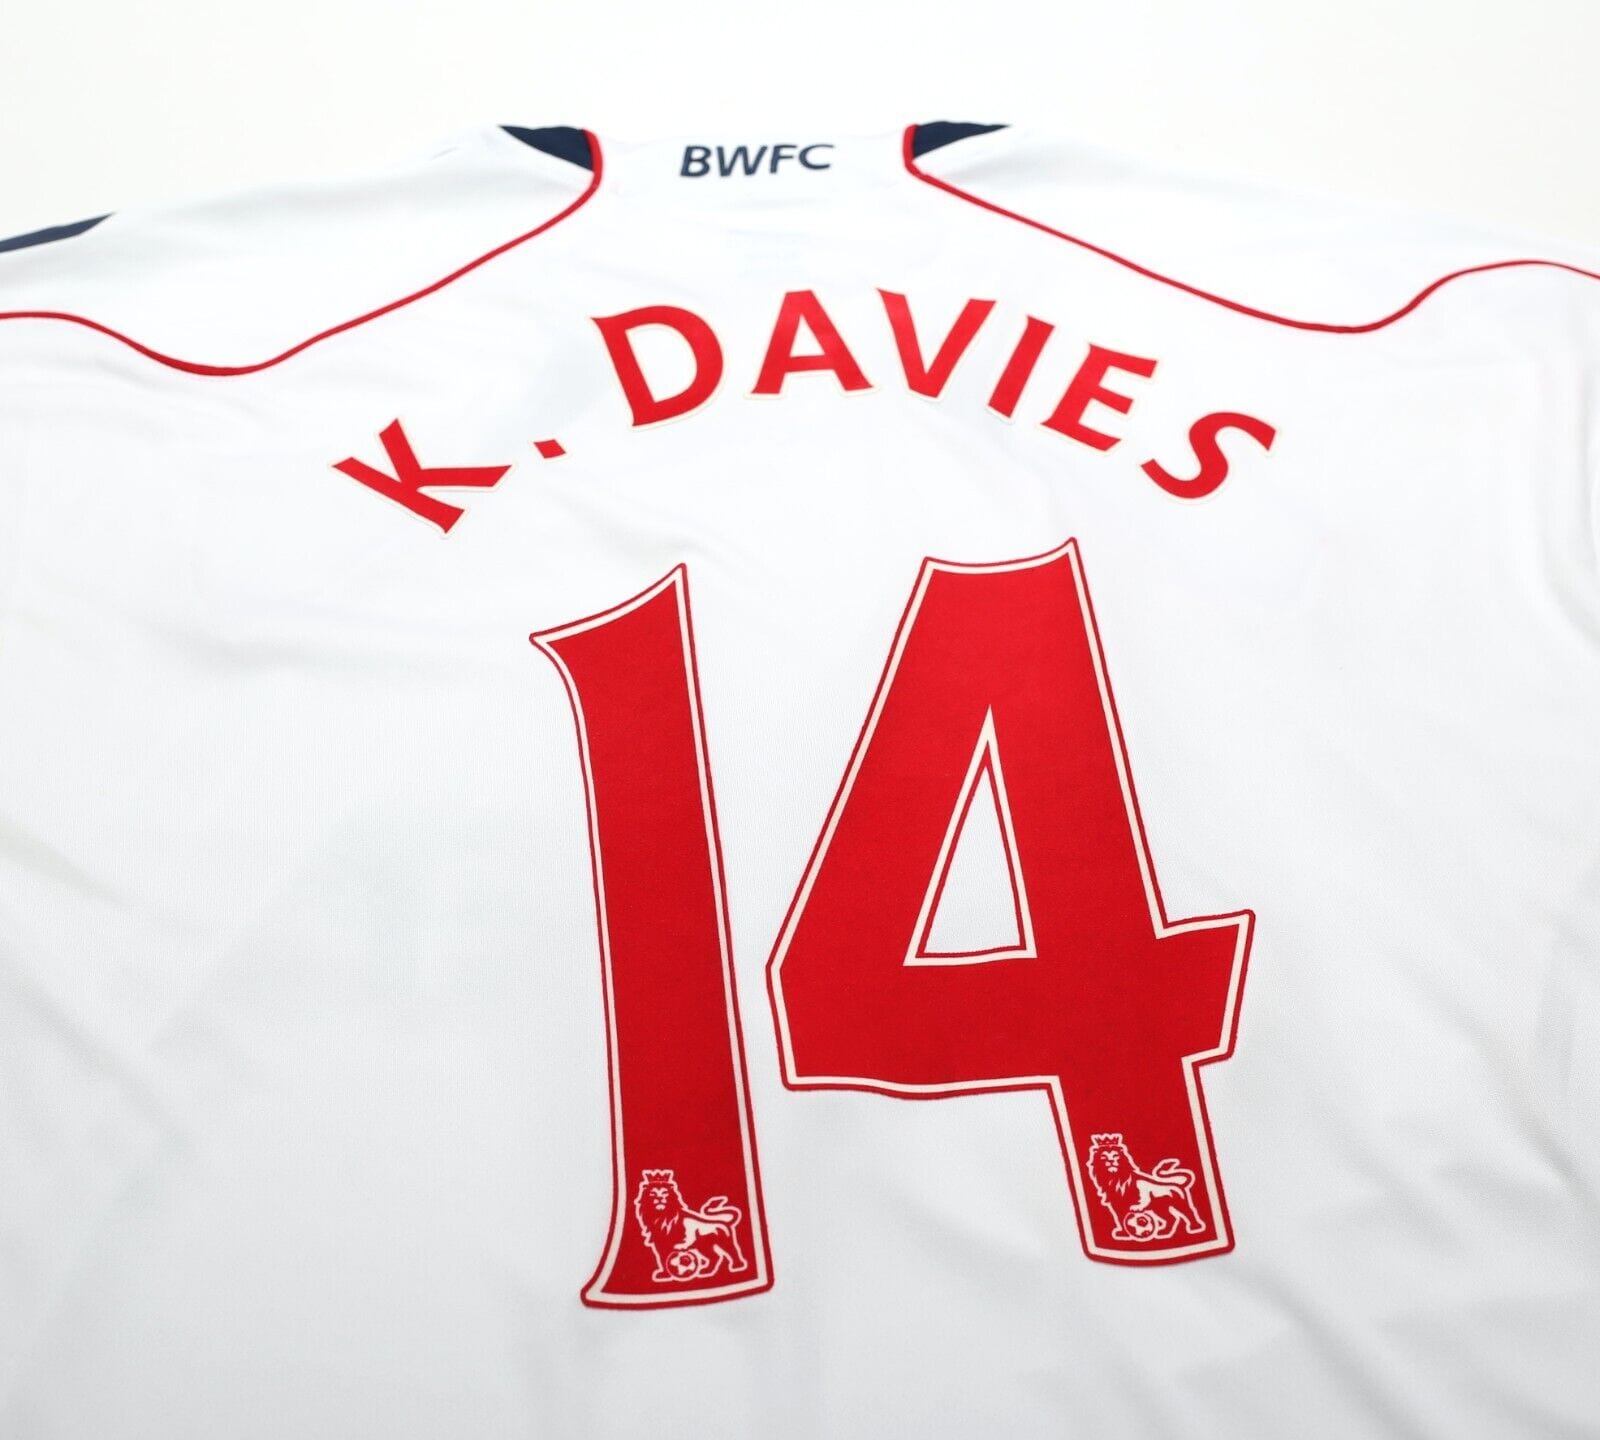 2010/11 K. DAVIES #14 Bolton Wanderers Vintage Reebok Home Football Shirt (M/L)